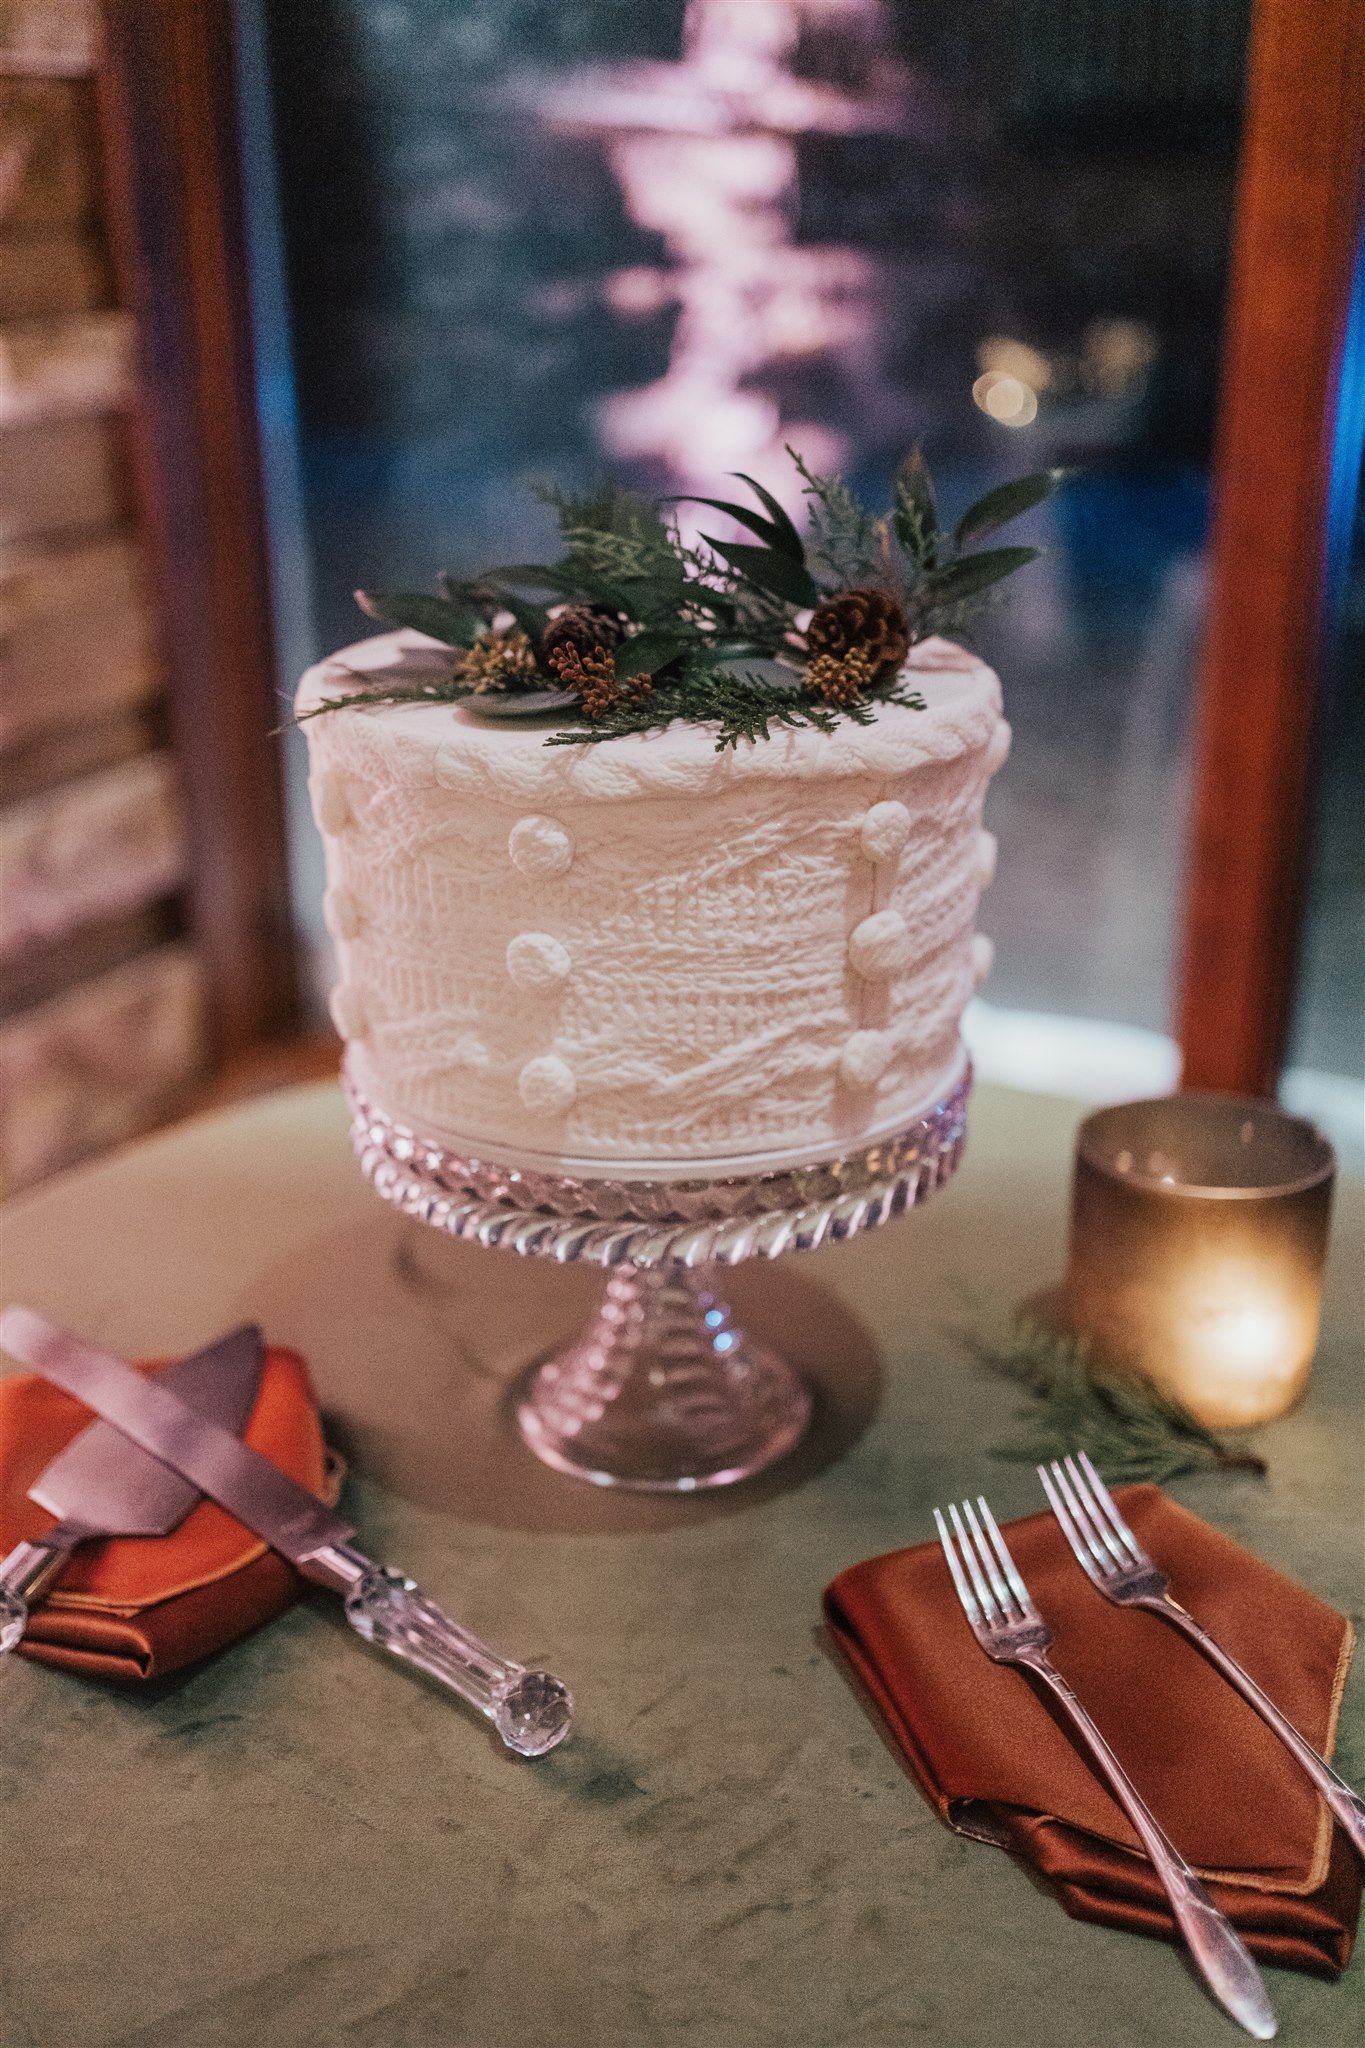  micro wedding evergreen cake winter vail 